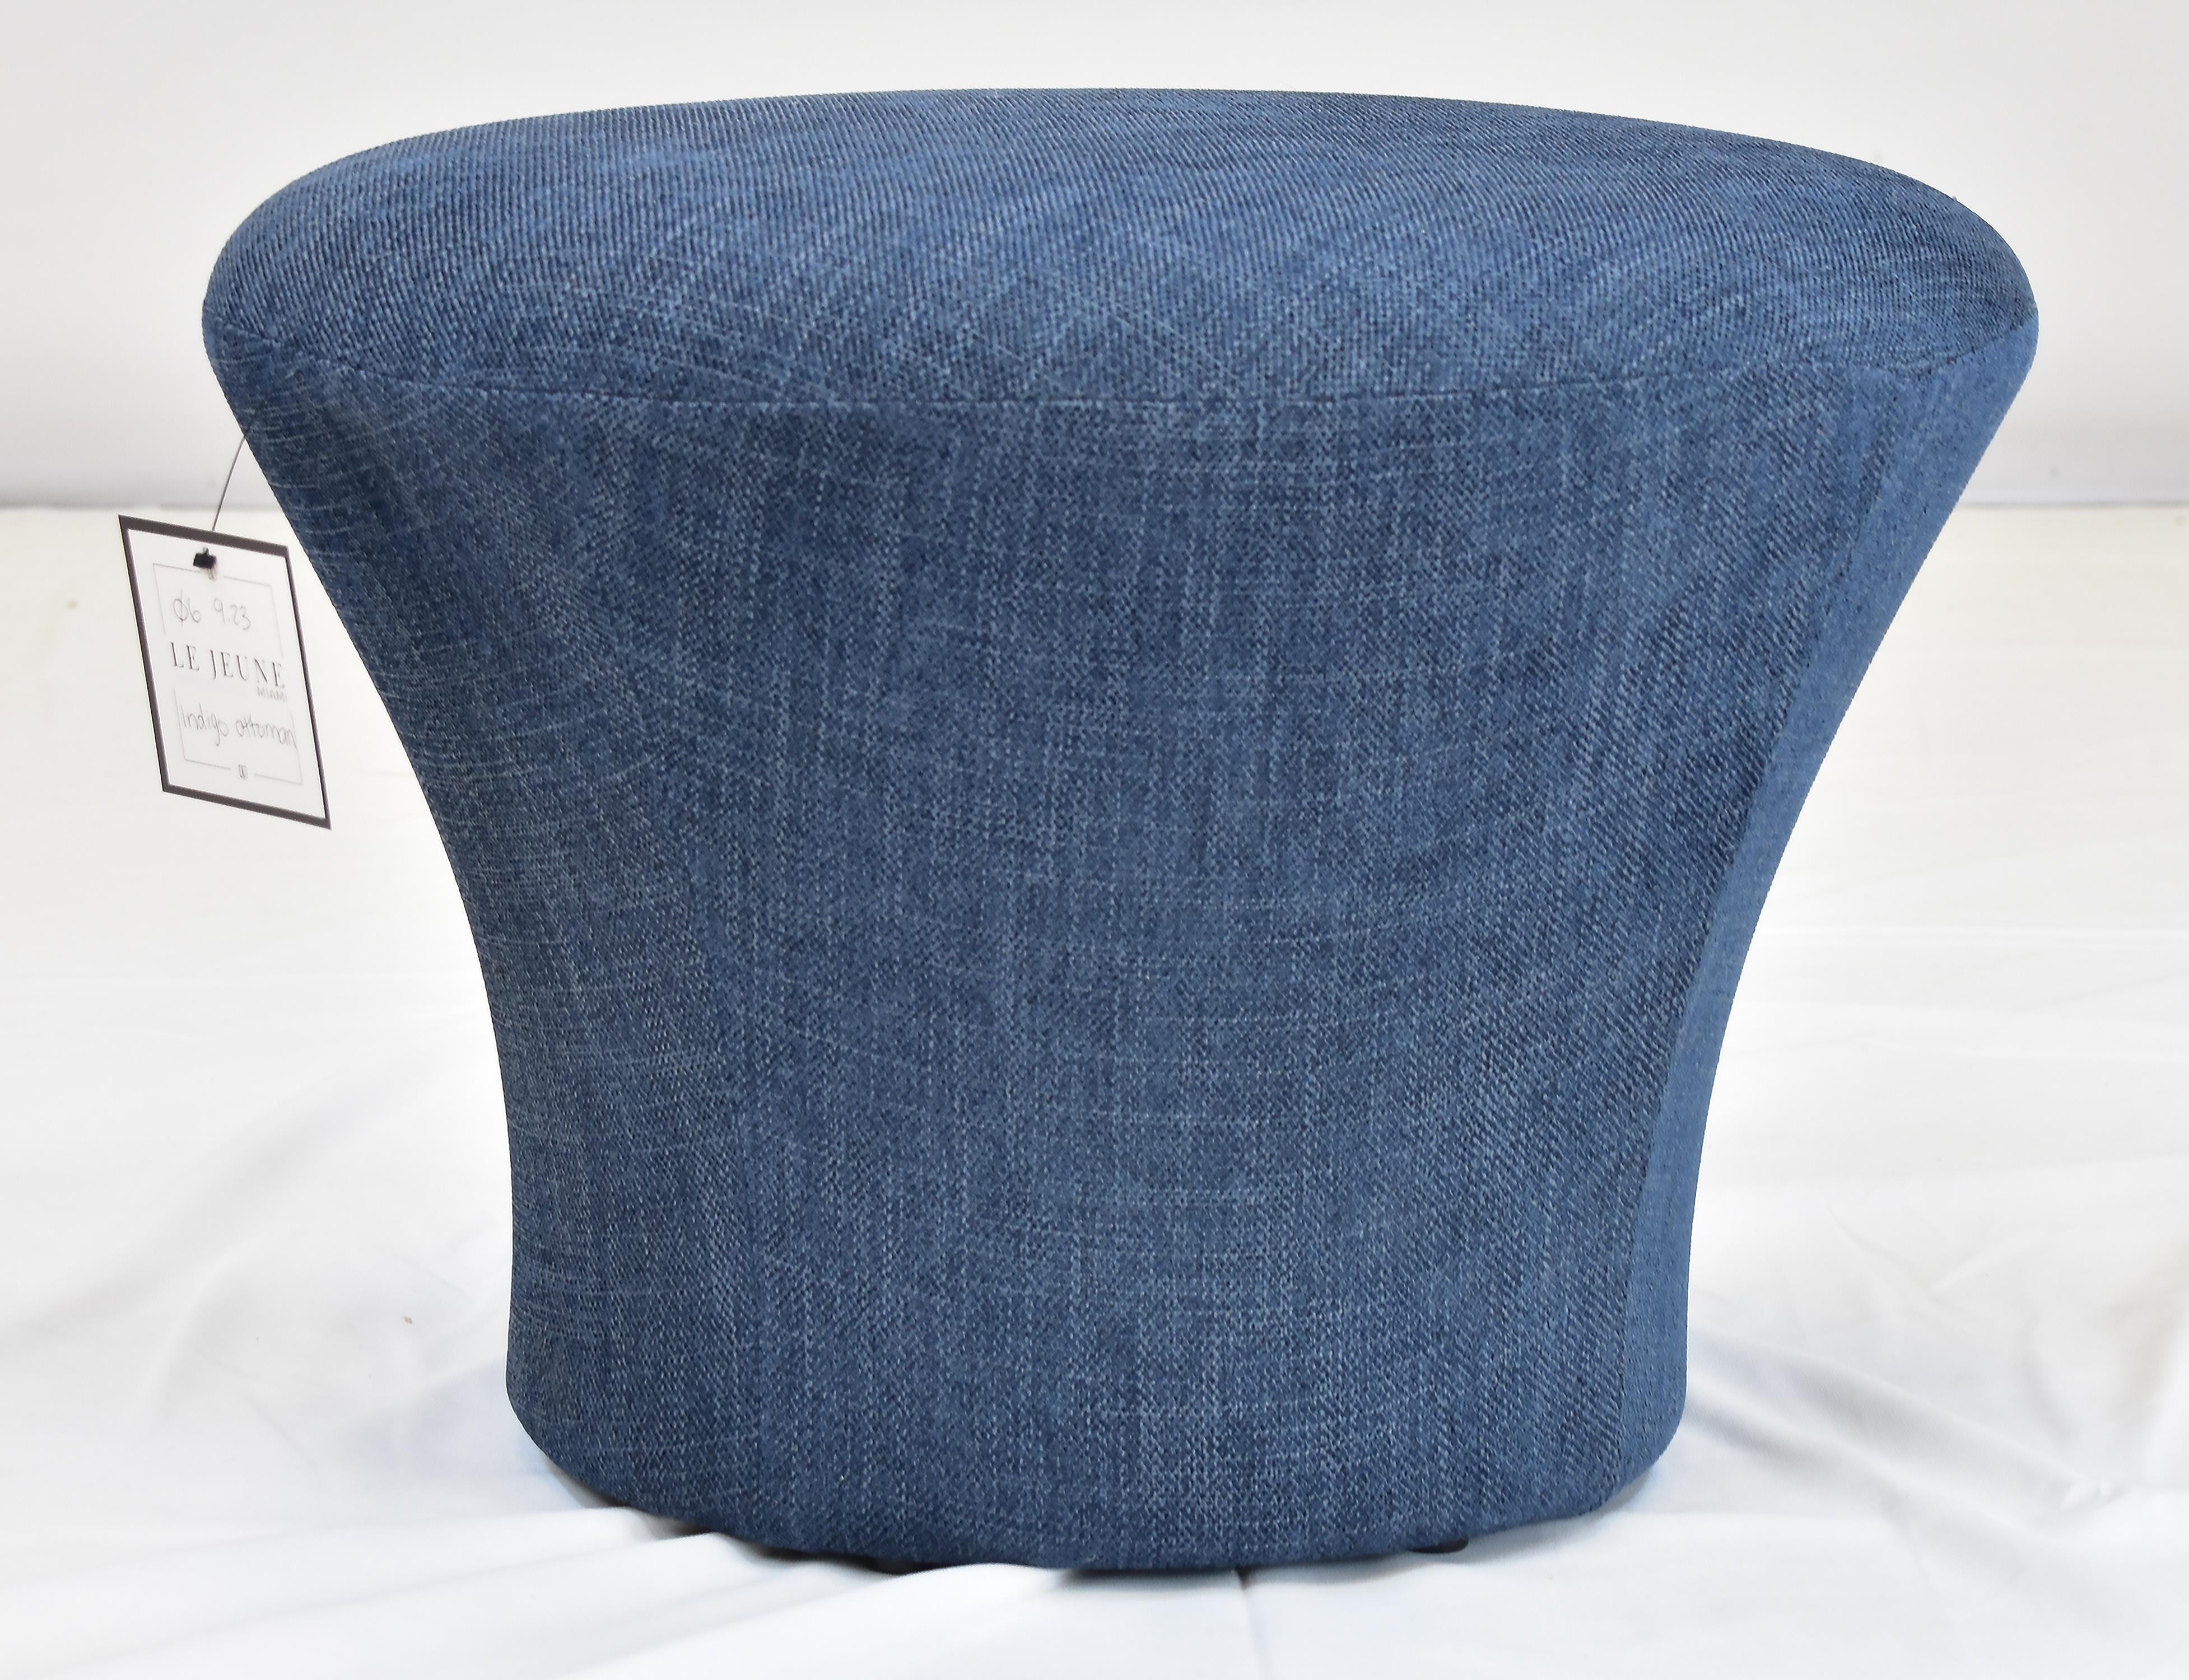 Modern Le Jeune Upholstery Indigo Ottoman Showroom Model, Per Item For Sale